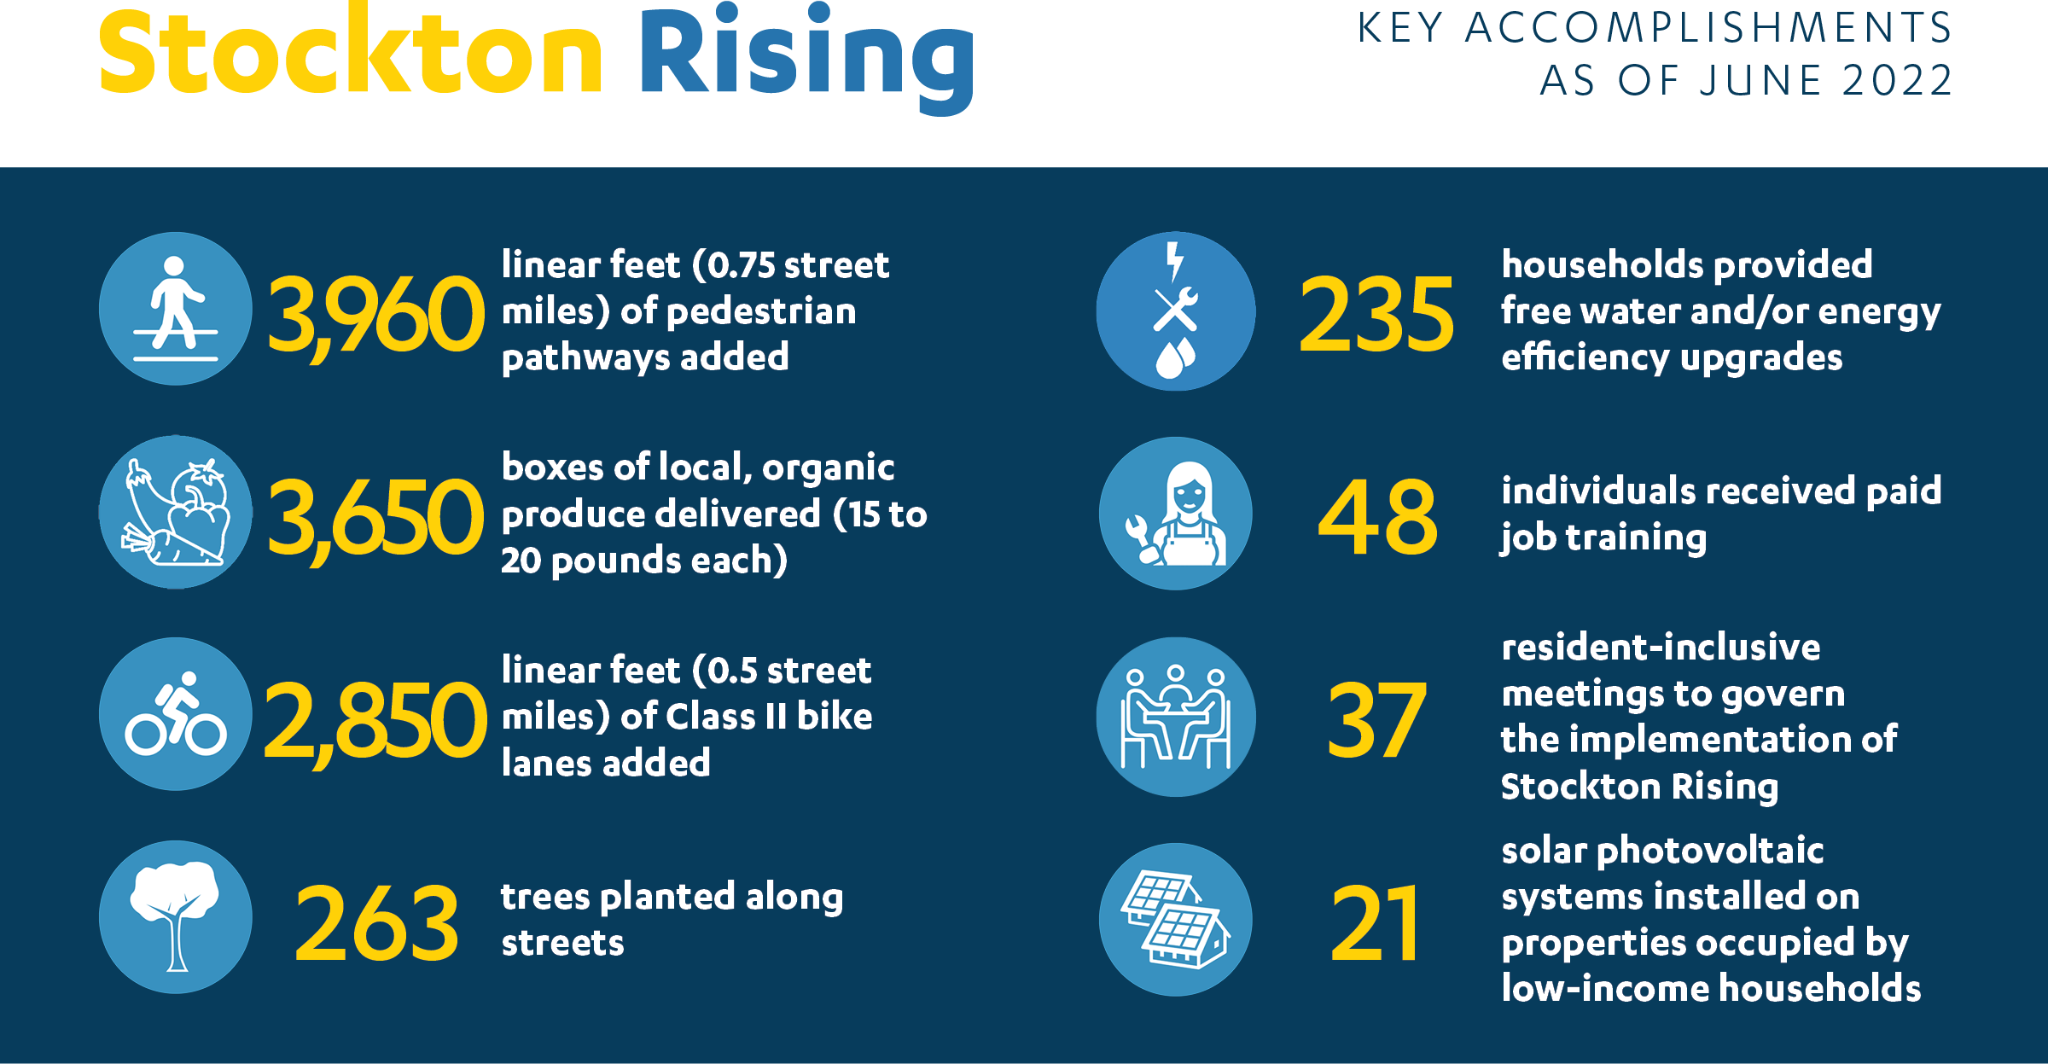 Stockton Rising: Key Accomplishments as of June 2022